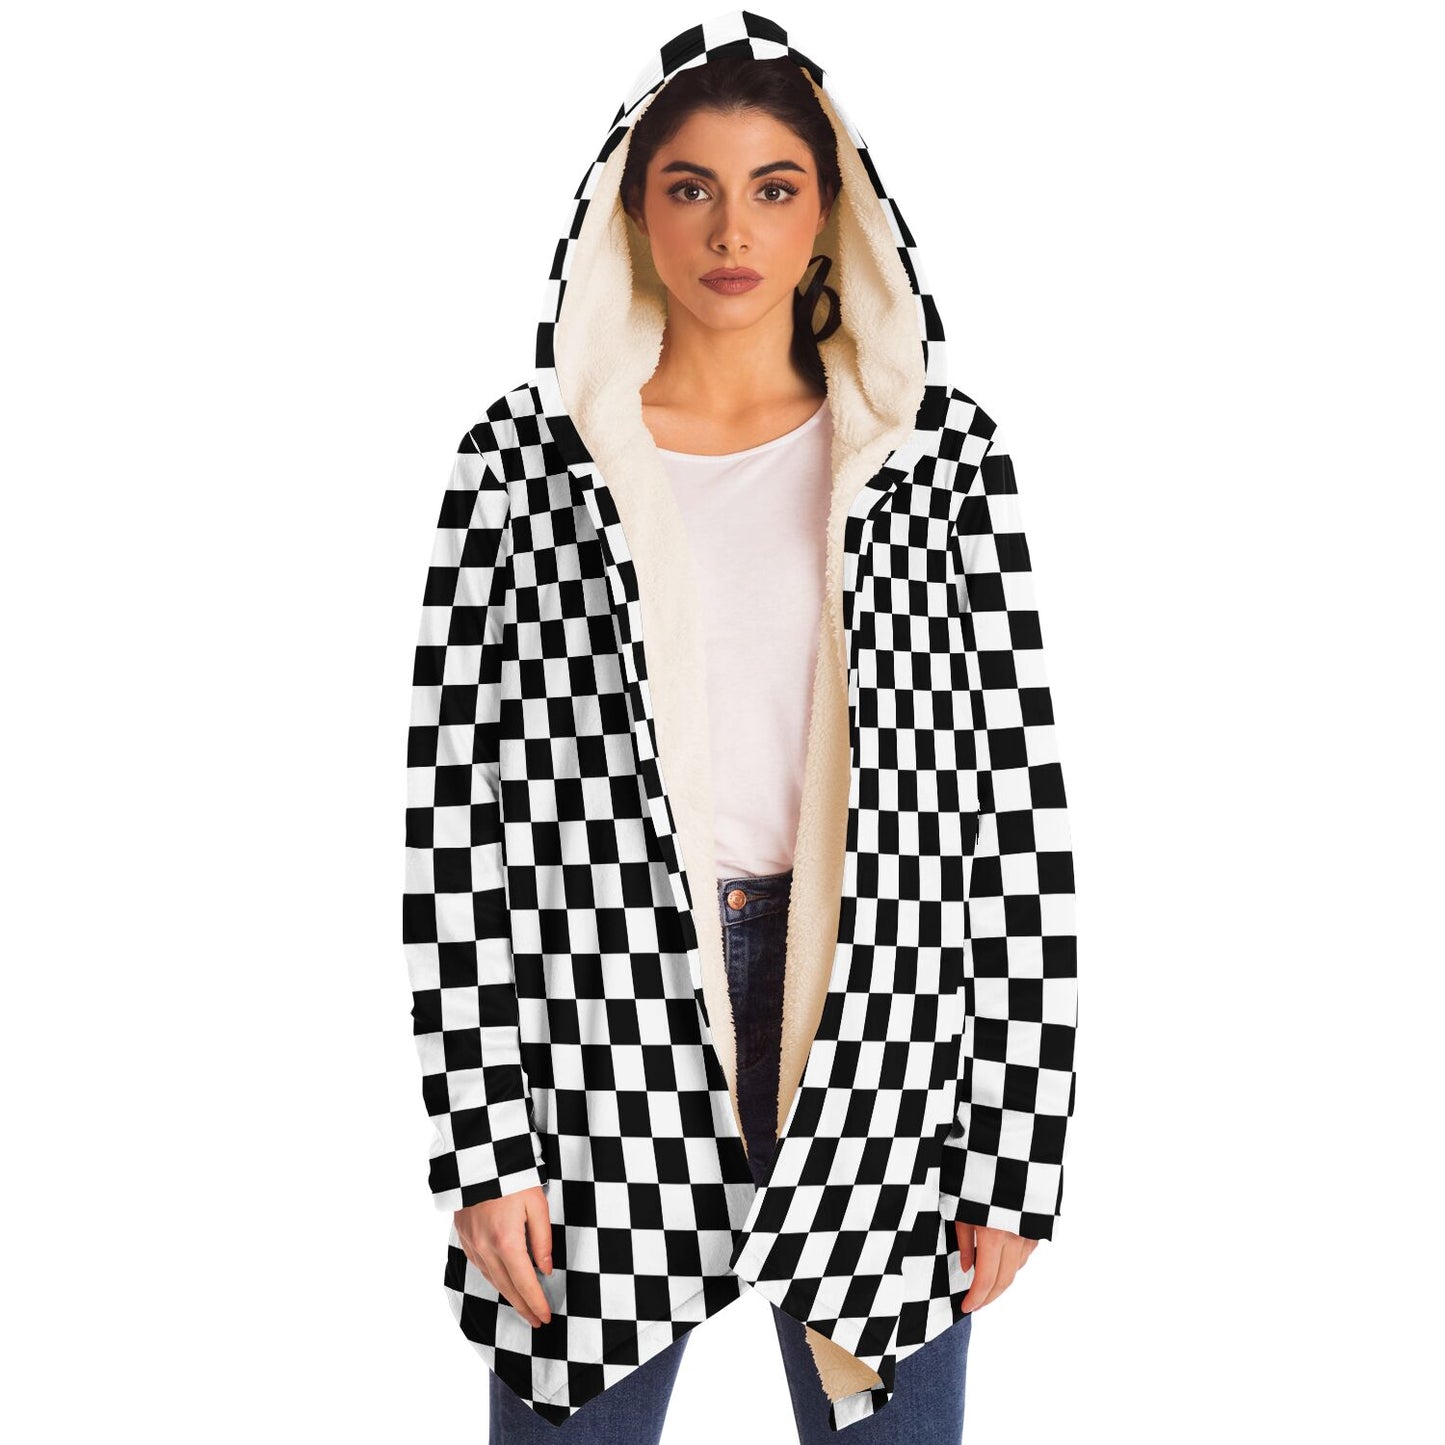 Checkered Hooded Cloak, Black White Check Men Women Modern Winter Warm Mink Blanket Festival Rave Wearable Cape with Pockets